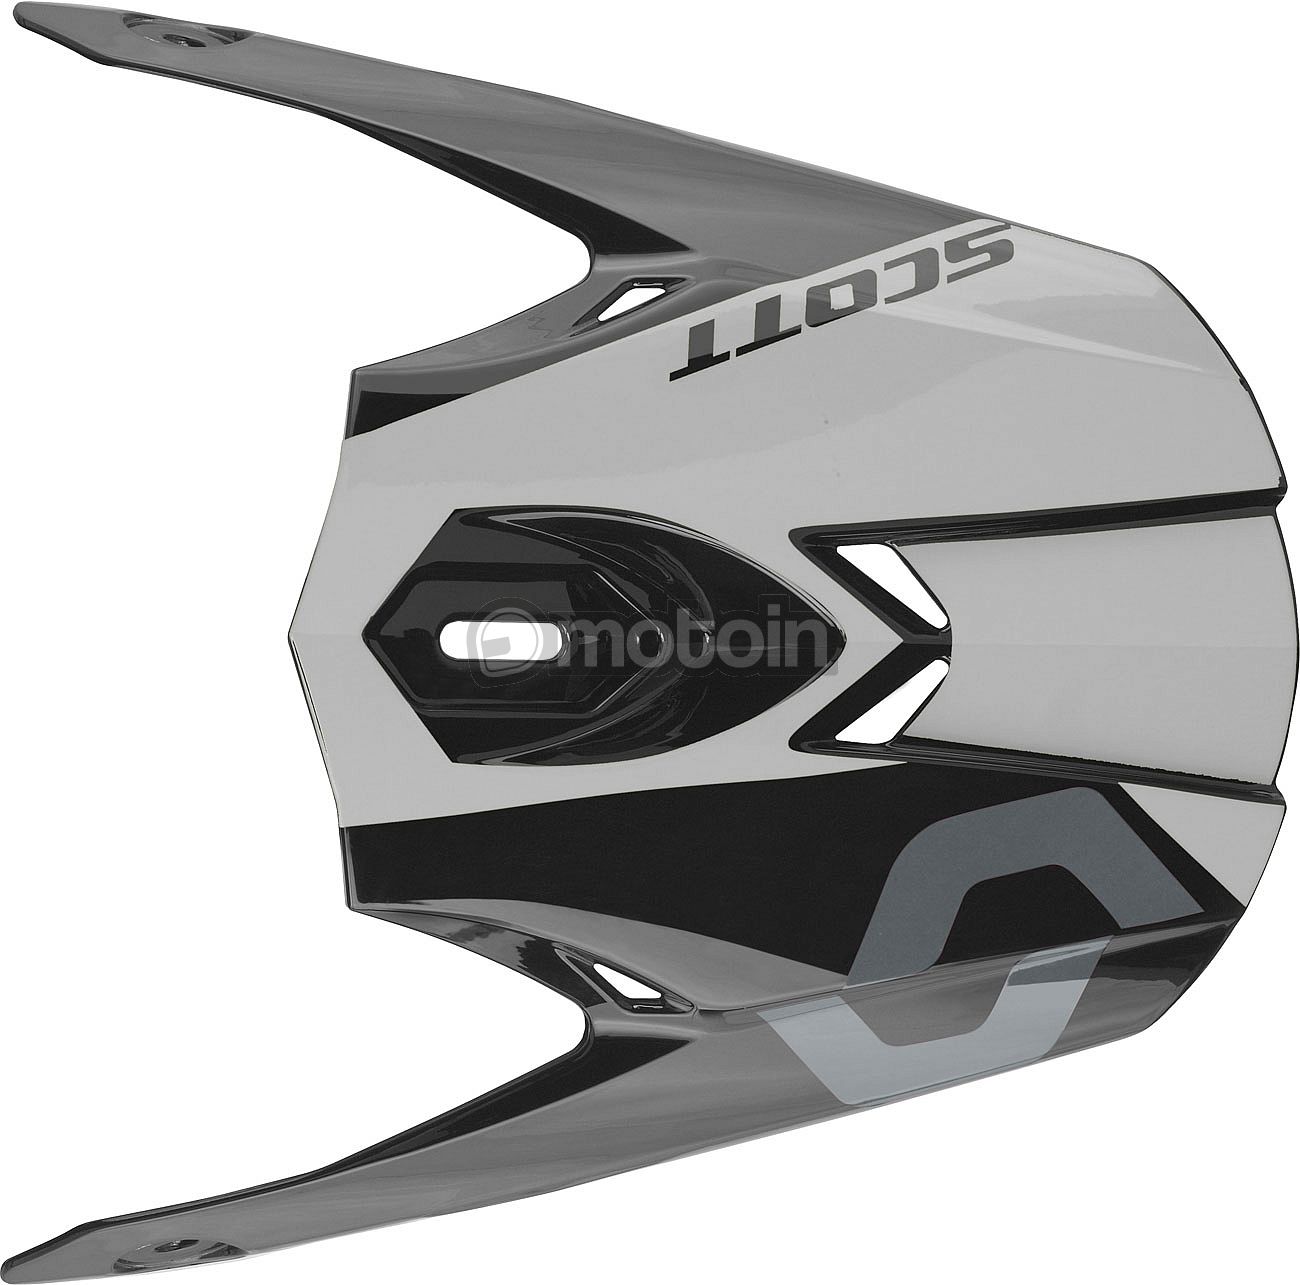 Scott 350 pro race visor casco visera blanco/negro 